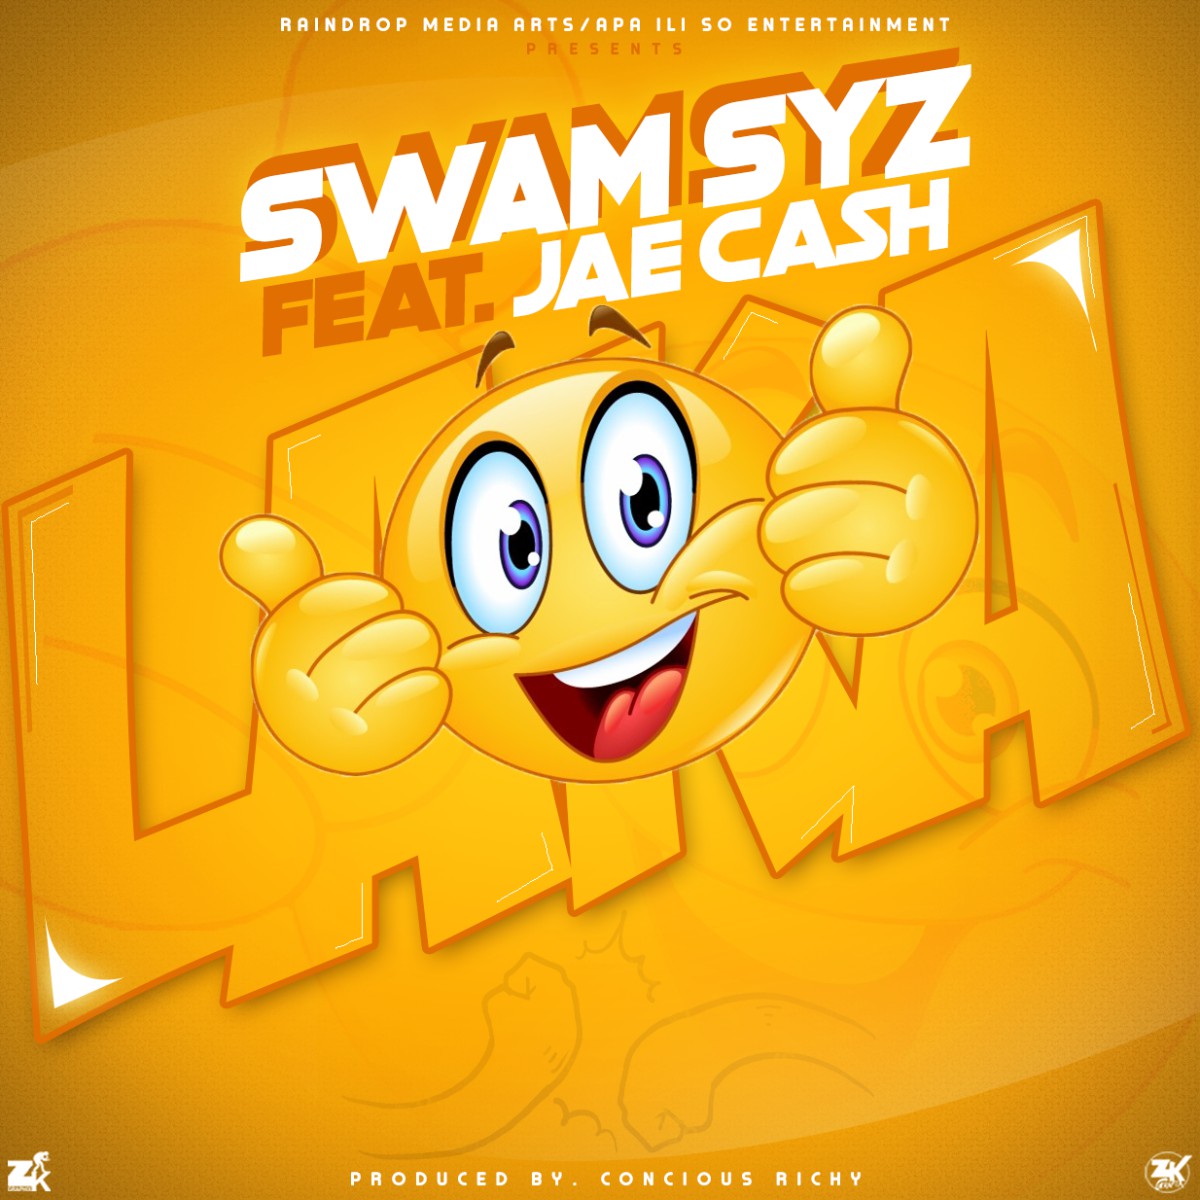 Swam Syz ft. Jae Cash - Laka